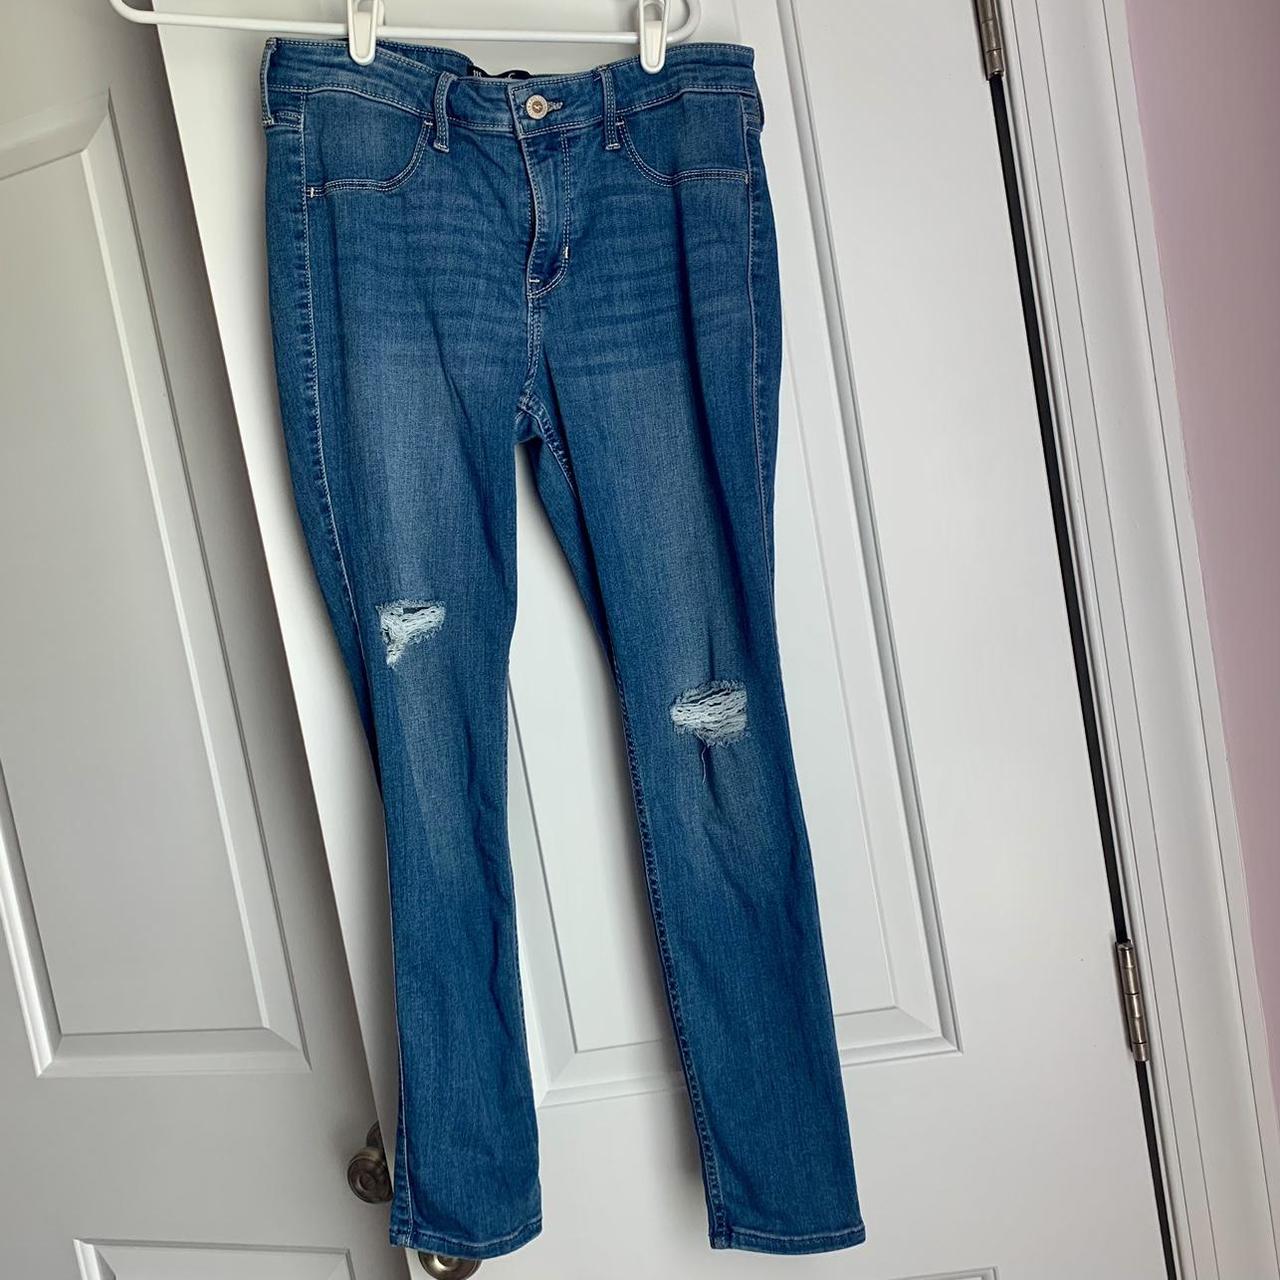 Hollister low-rise ripped jean leggings (jeggings).